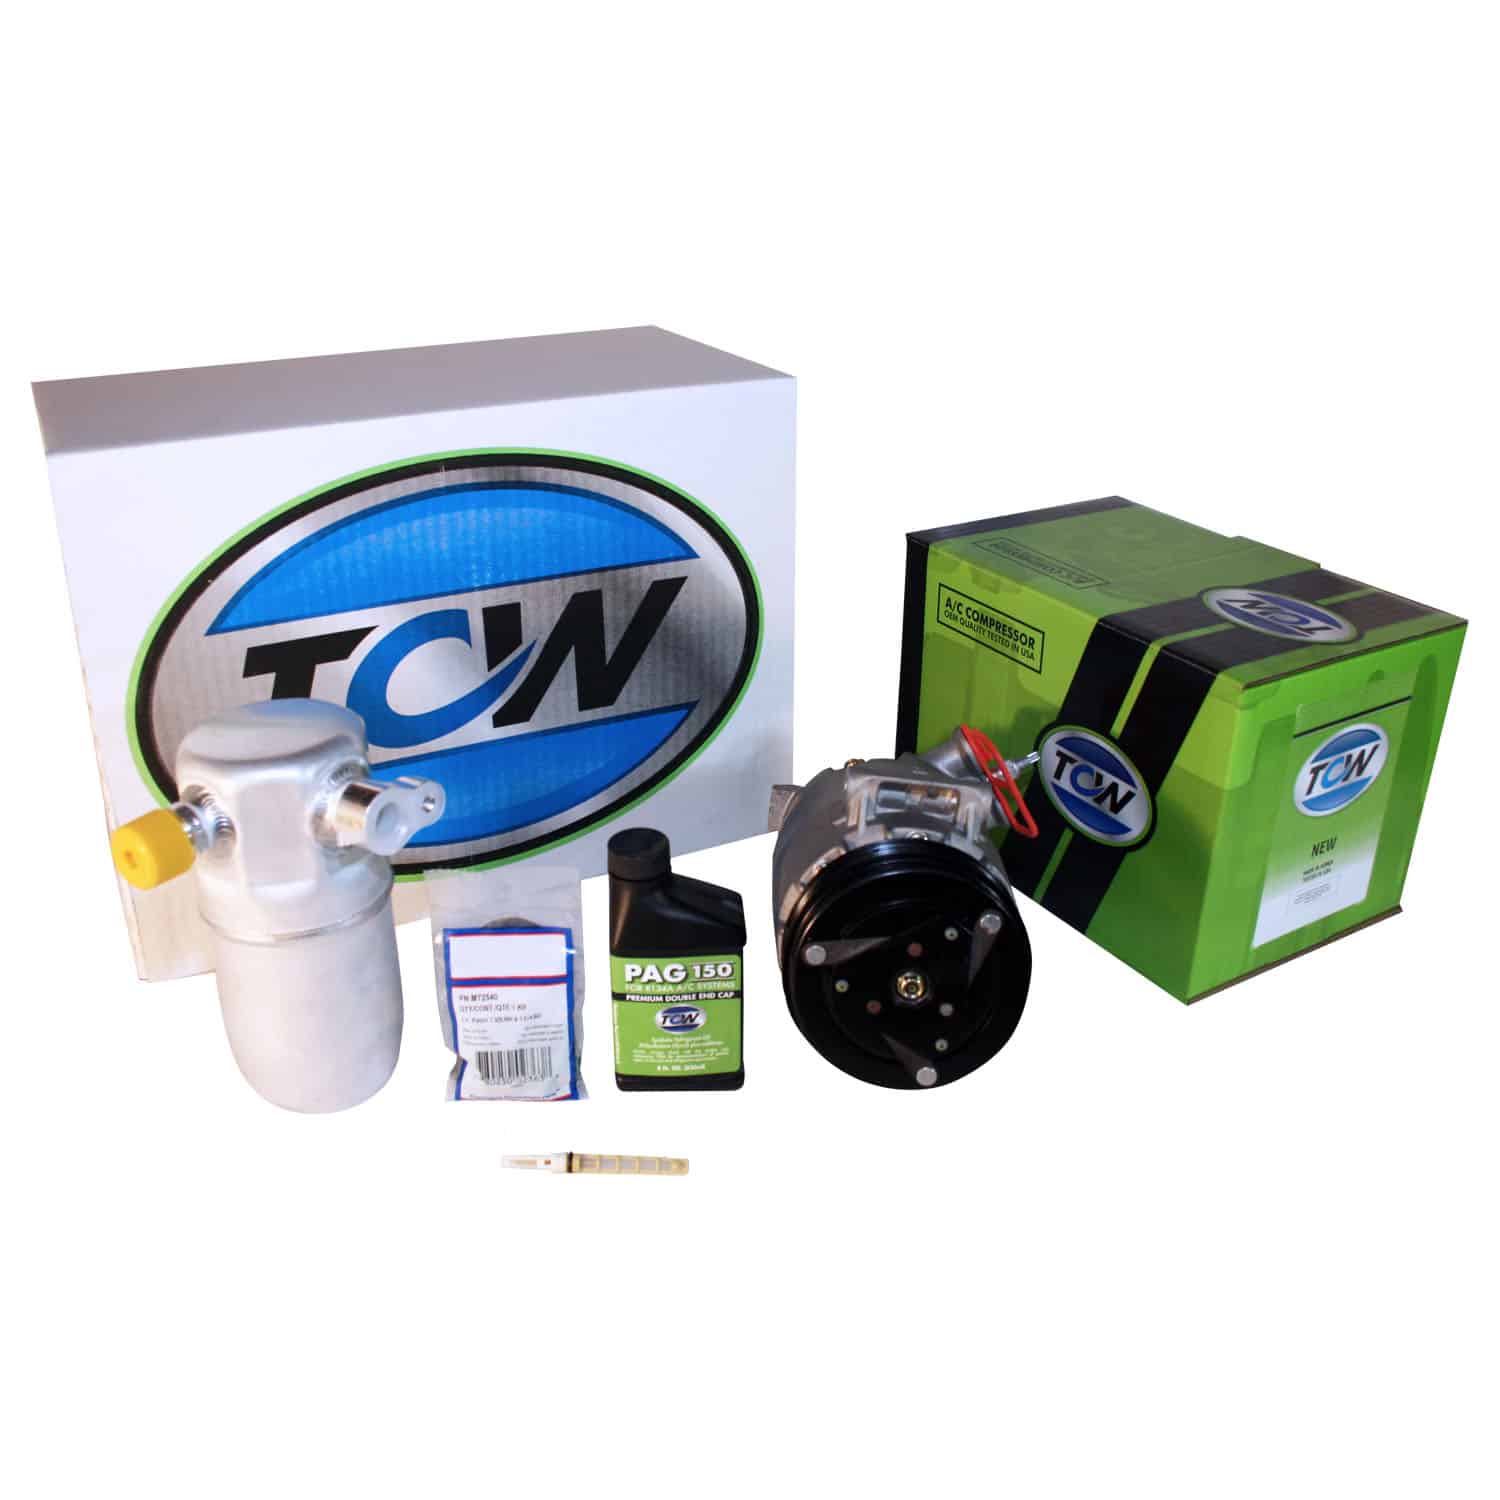 TCW Vehicle A/C Kit K1000221N New Product Image field_60b6a13a6e67c